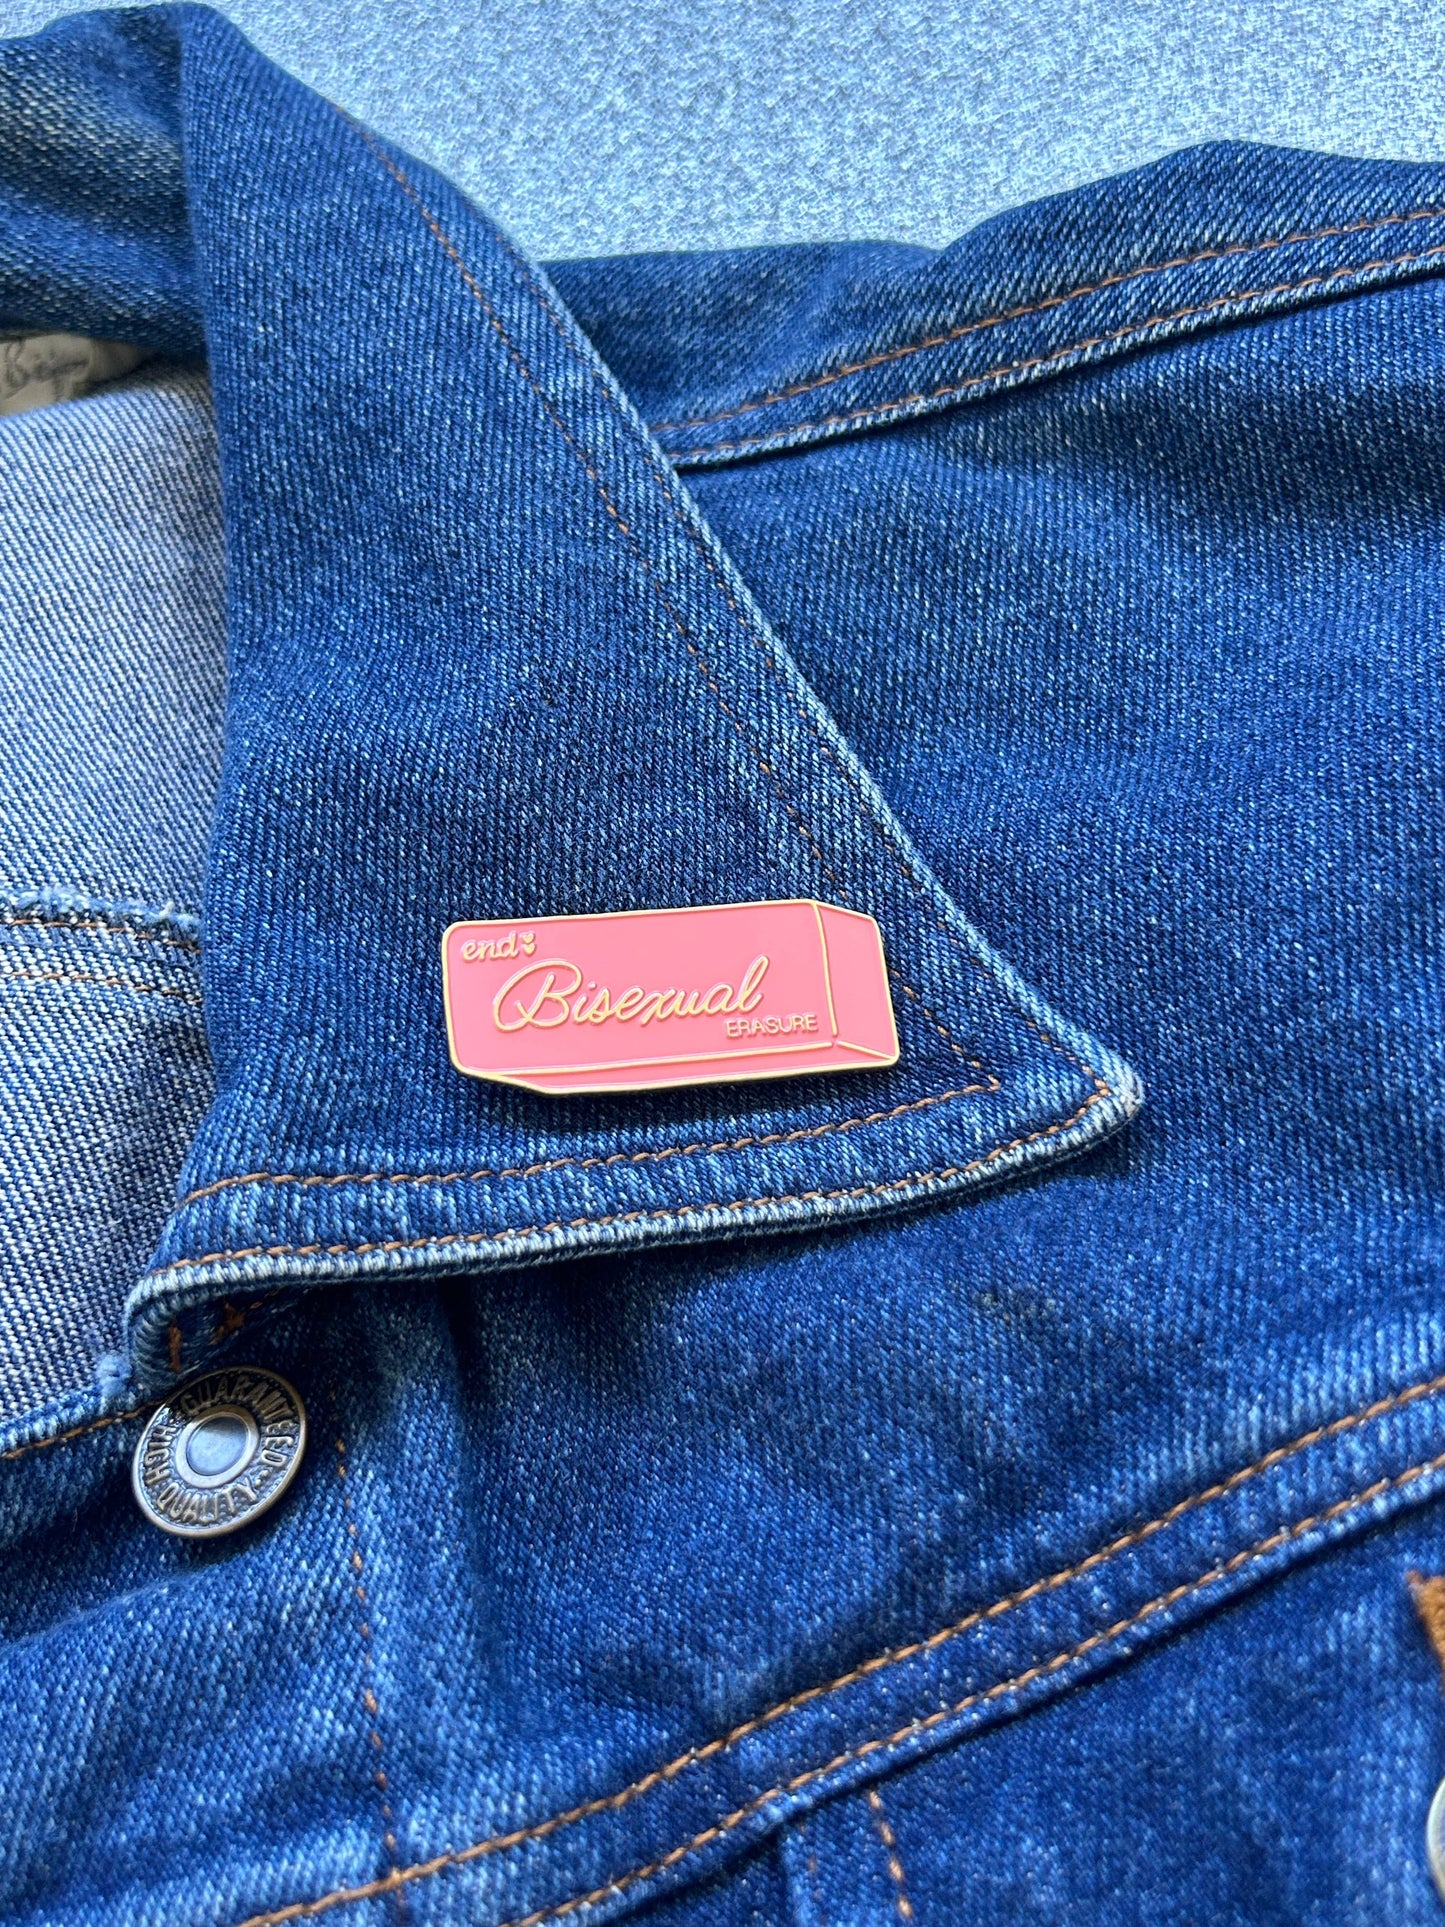 Bisexual Eraser | Enamel Pin pin The Peach Fuzz   